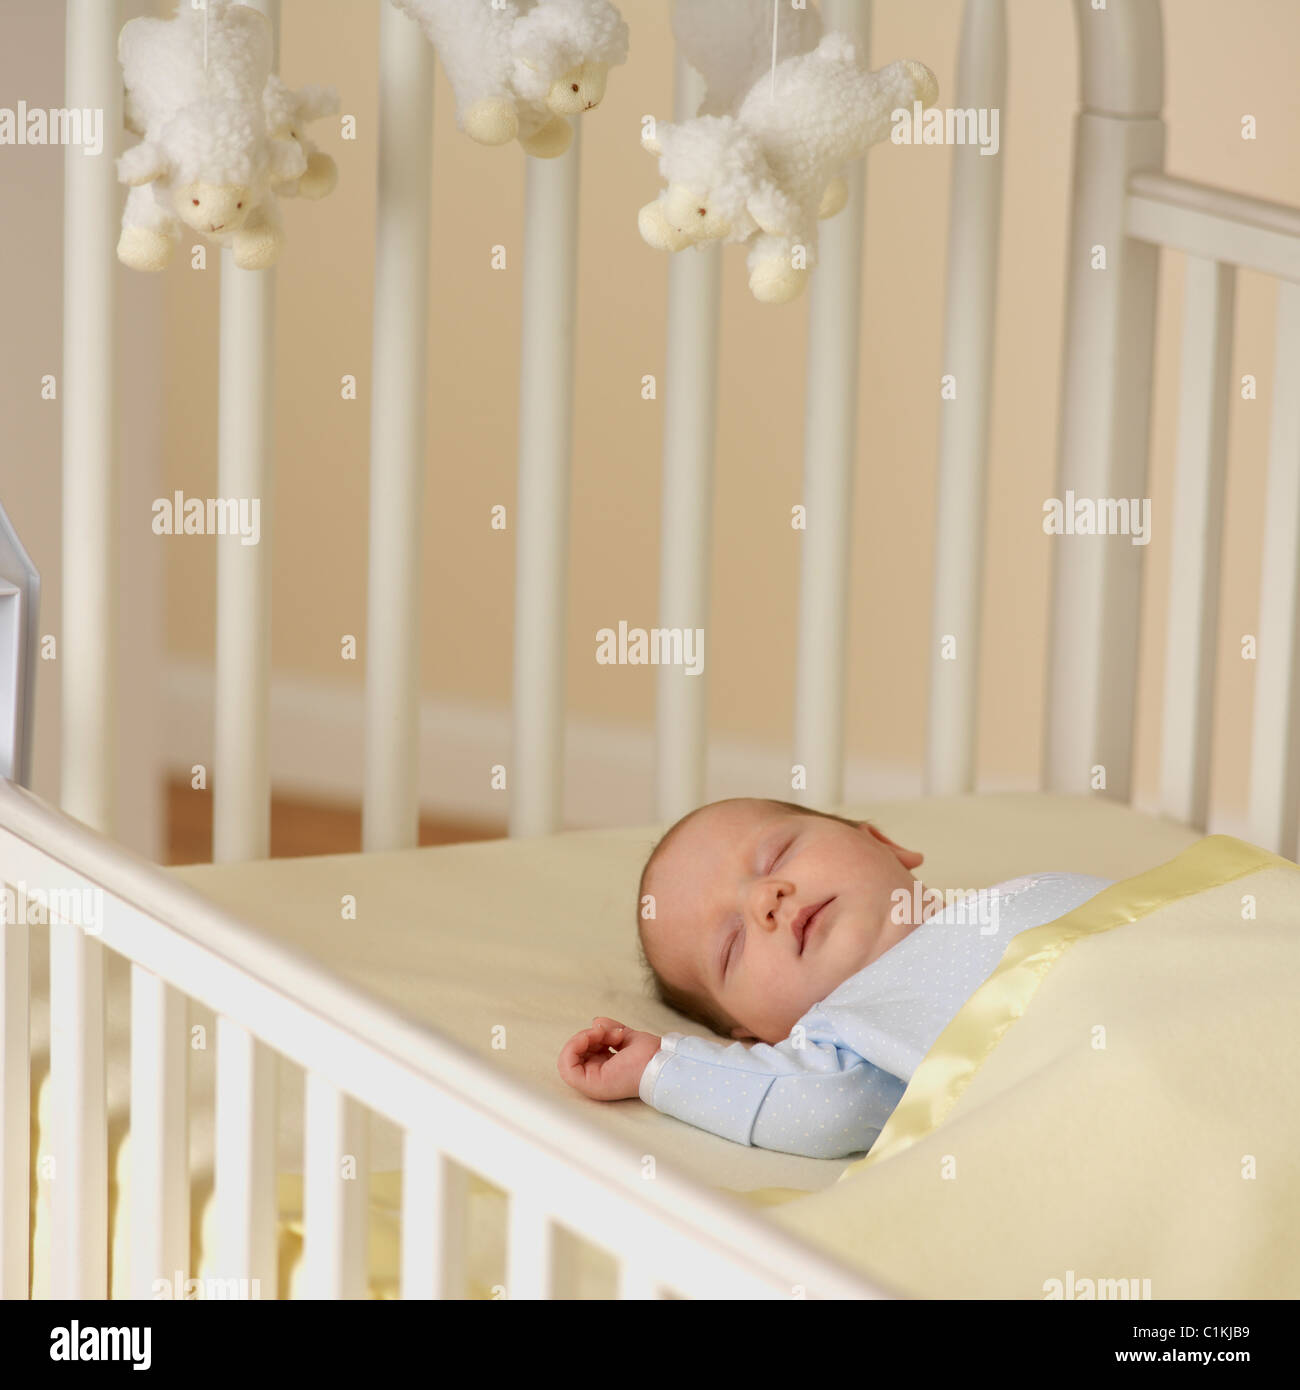 Sleeping Baby In Crib Stock Photo Alamy